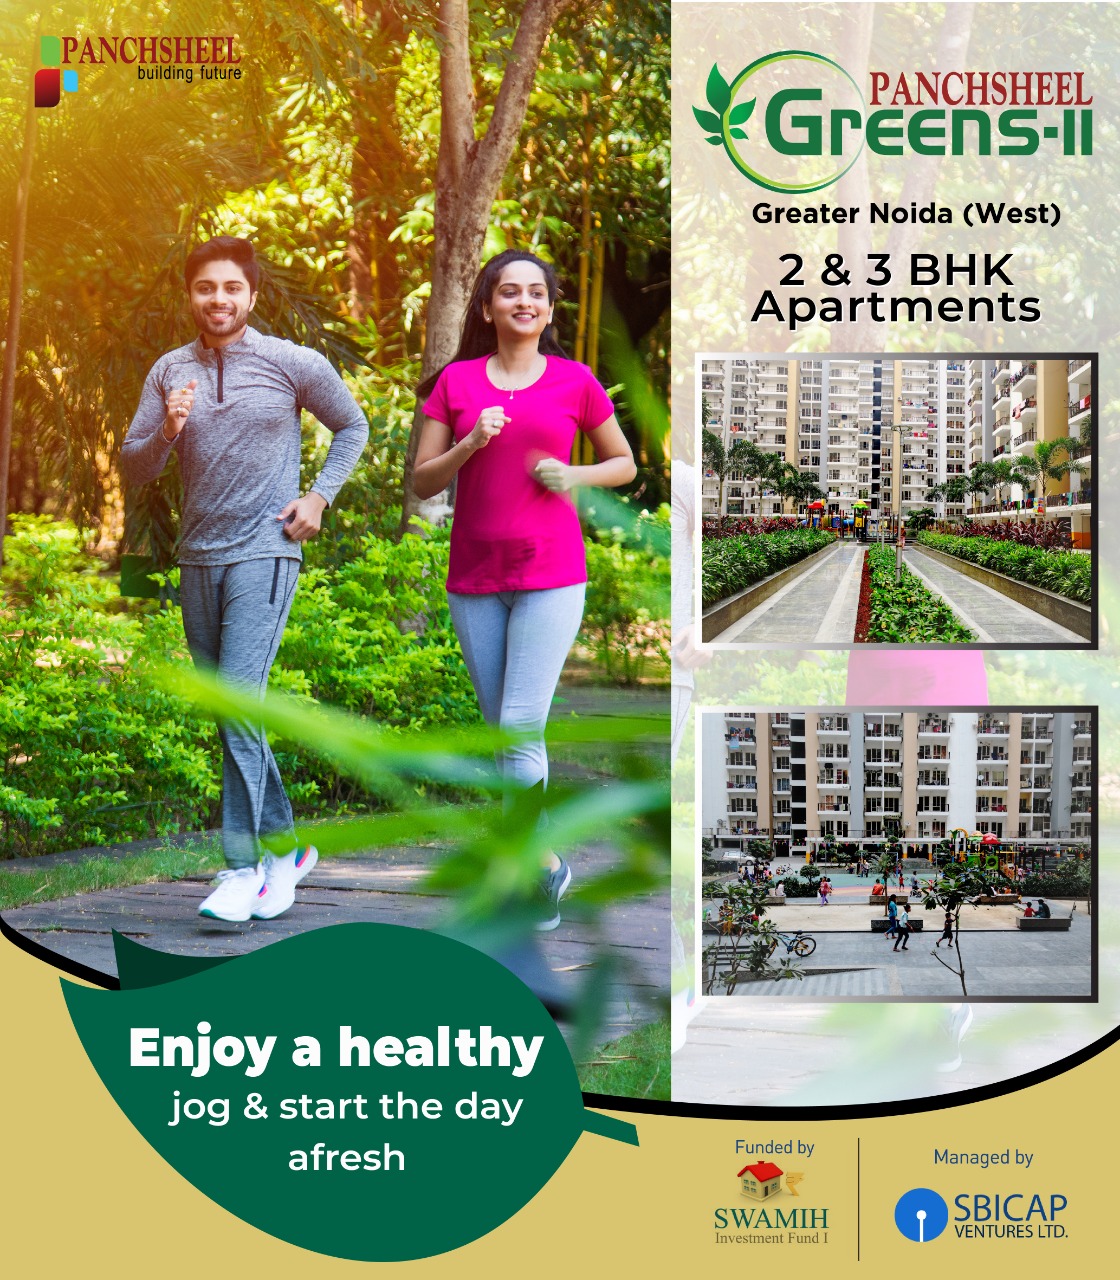 Enjoy a healthy jog & start the day afresh at Panchsheel Greens 2, Greater Noida